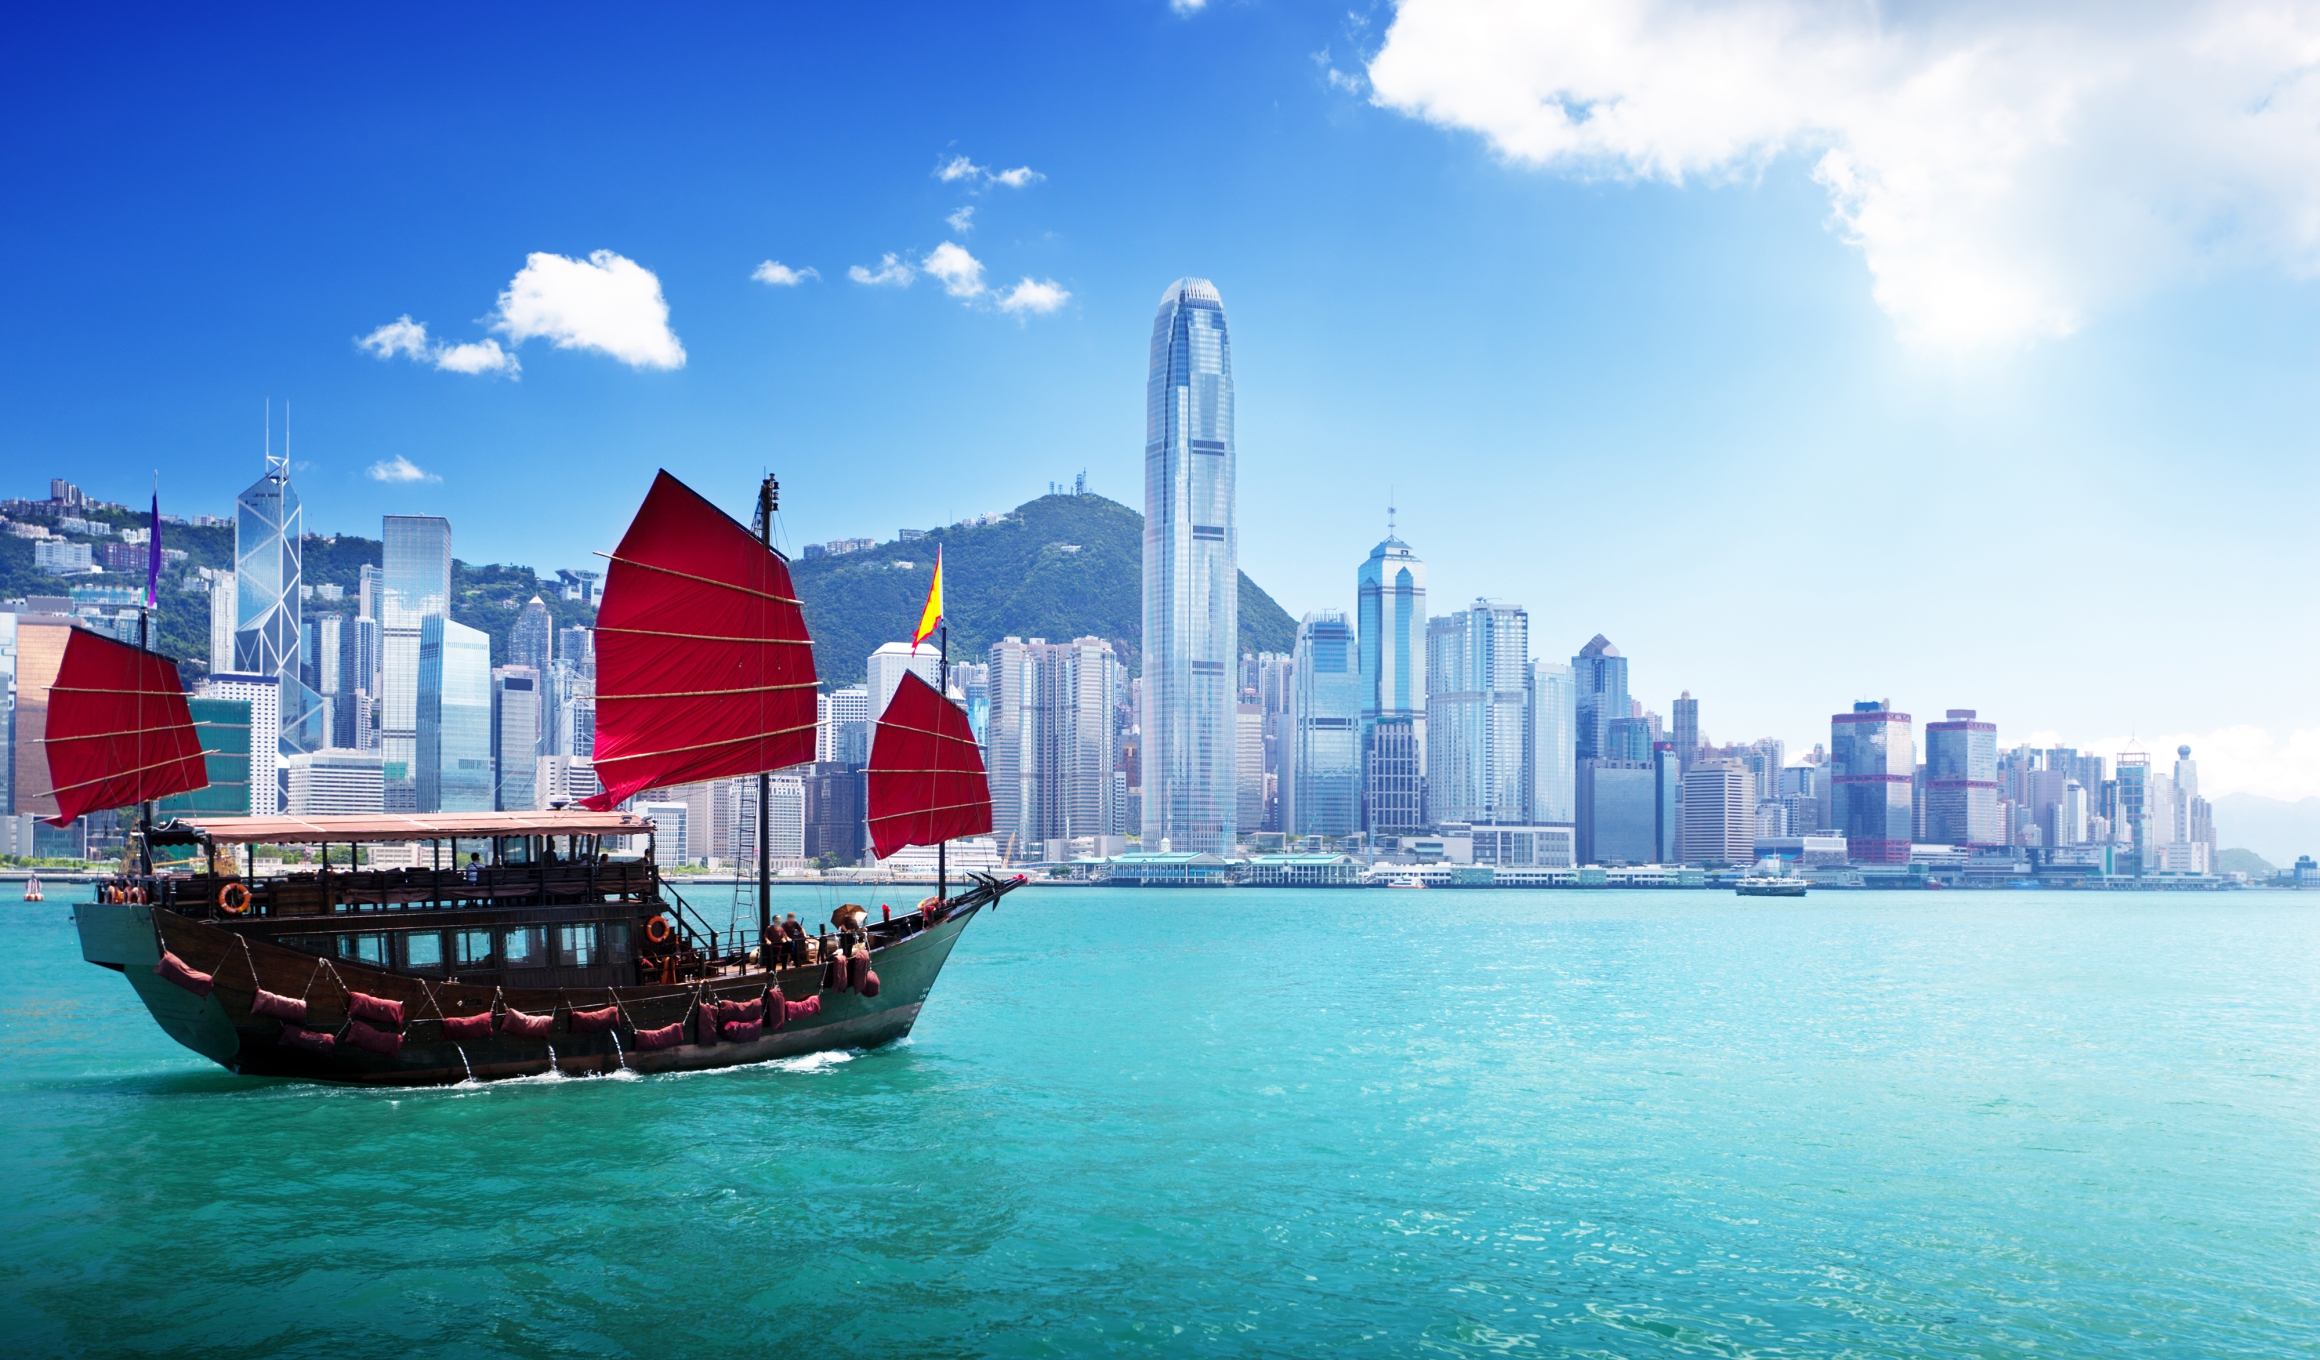 Hong Kong regulator 'concerned' by ICO funding boom | TechCrunch